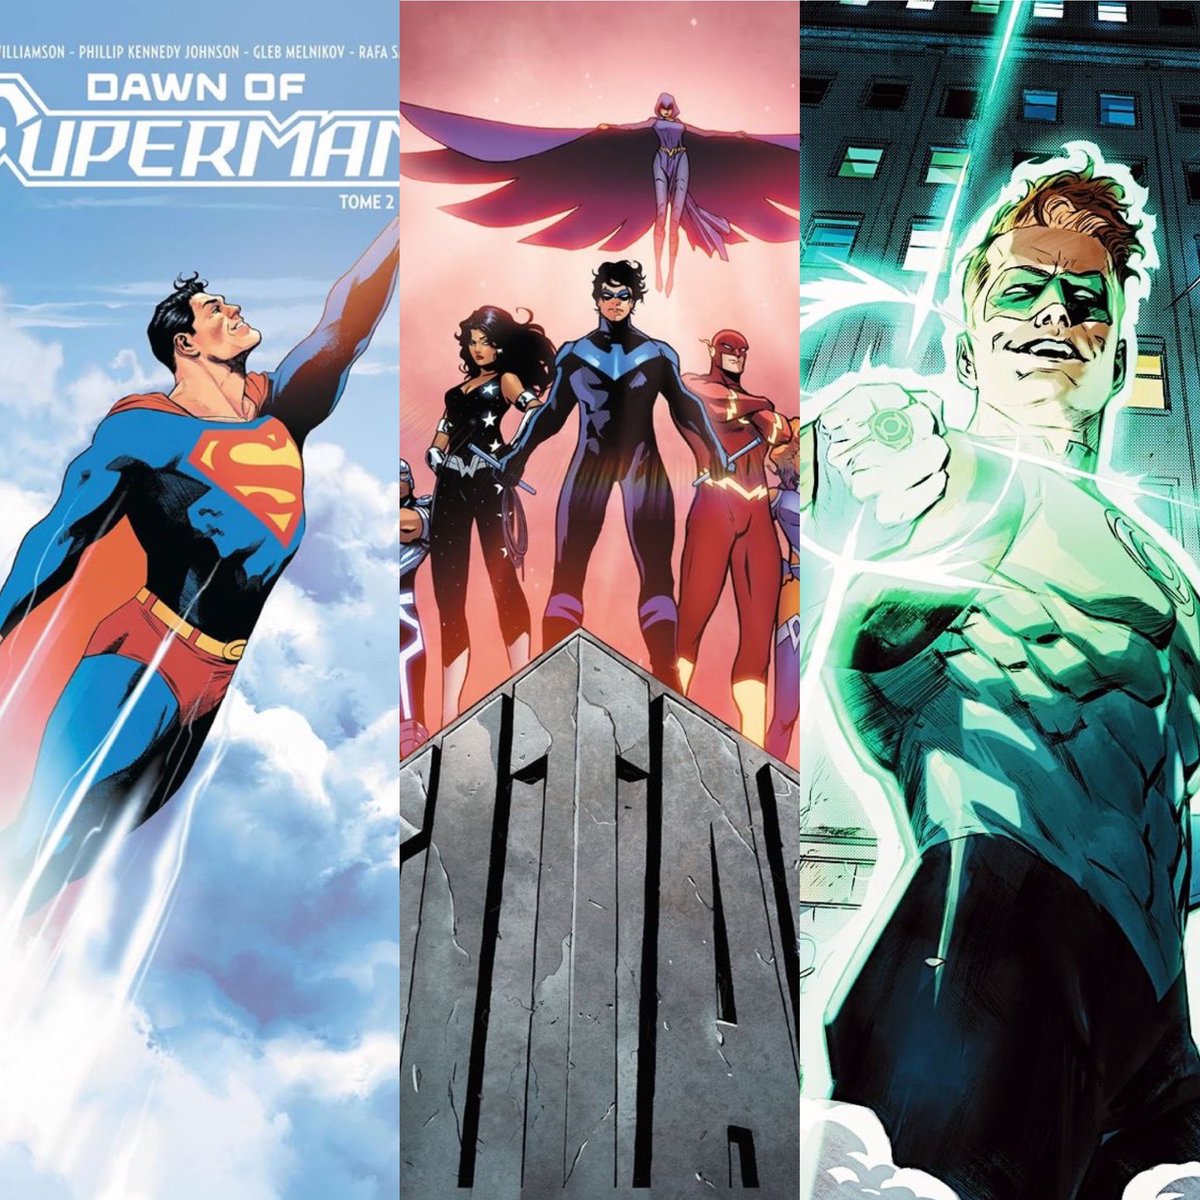 Les sorties ce vendredi 26 Avril en matière de Dawn Of DC :

-Dawn Of Superman Tome 2
-Dawn Of Titans Tome 2
-Dawn Of Green Lantern Tome 1 

Qu’allez vous prendre ?